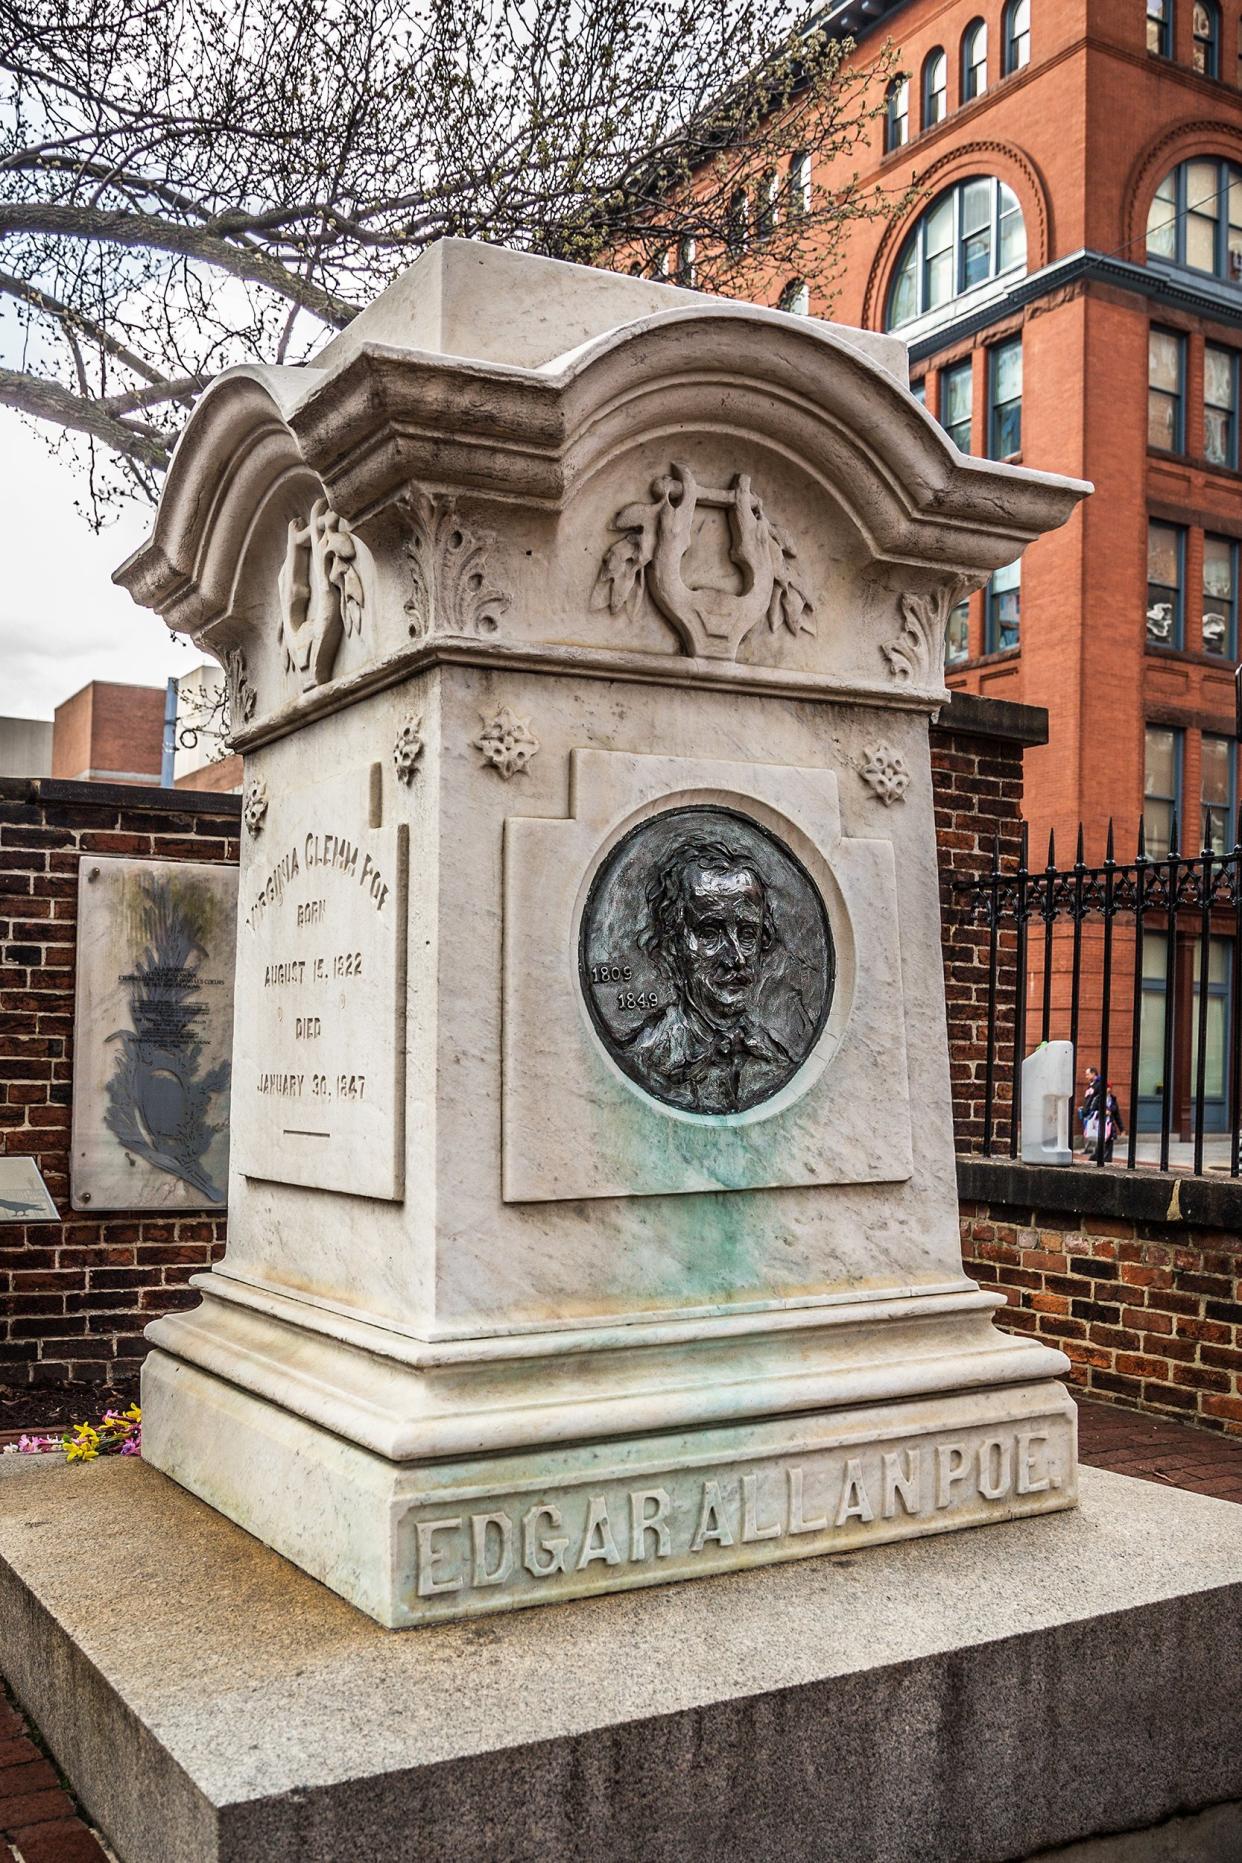 Edgar Allan Poe's Grave in Baltimore, MD